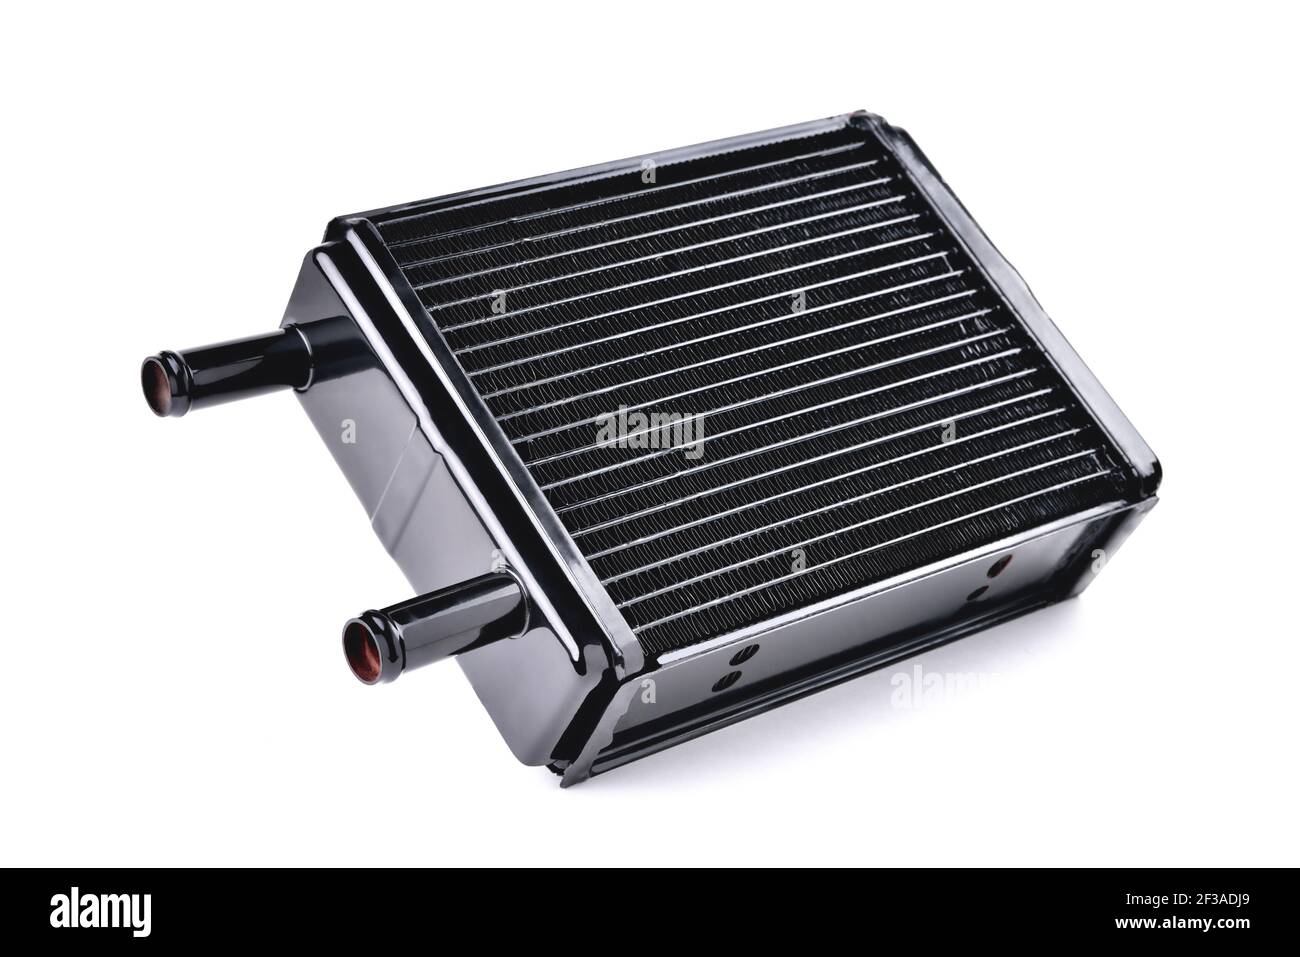 https://c8.alamy.com/comp/2F3ADJ9/car-heating-and-air-conditioning-system-radiator-car-stove-radiator-white-background-close-up-selective-focus-2F3ADJ9.jpg